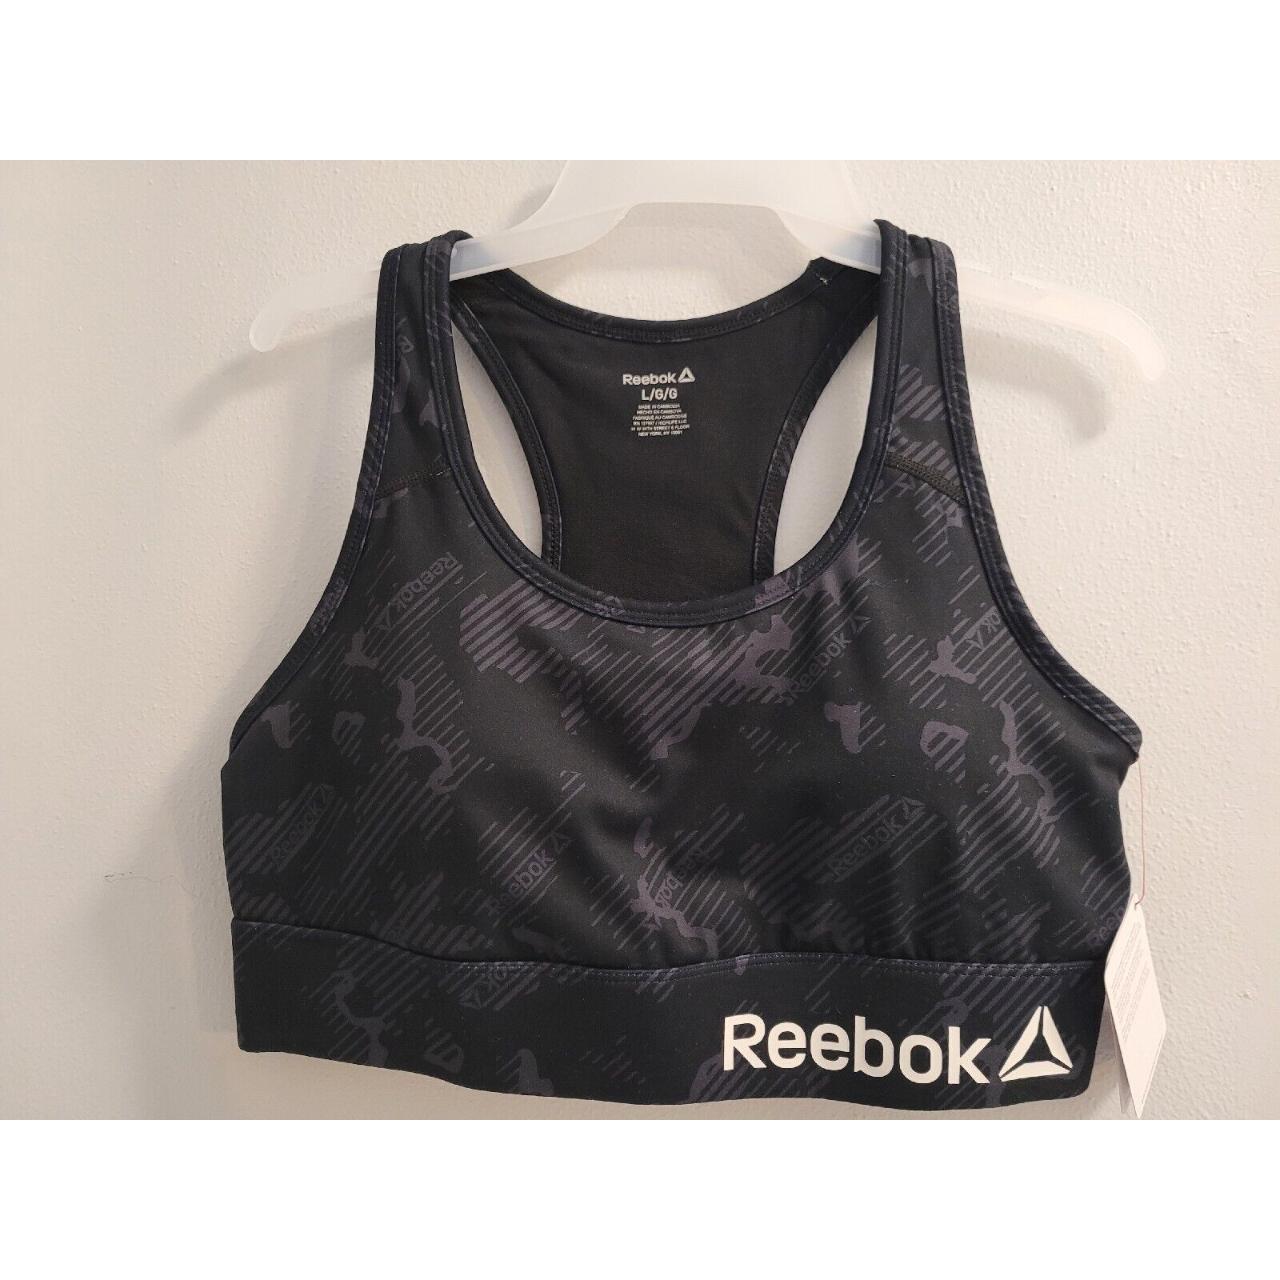 Reebok Women's Black Medium Impact Sports Bra Size